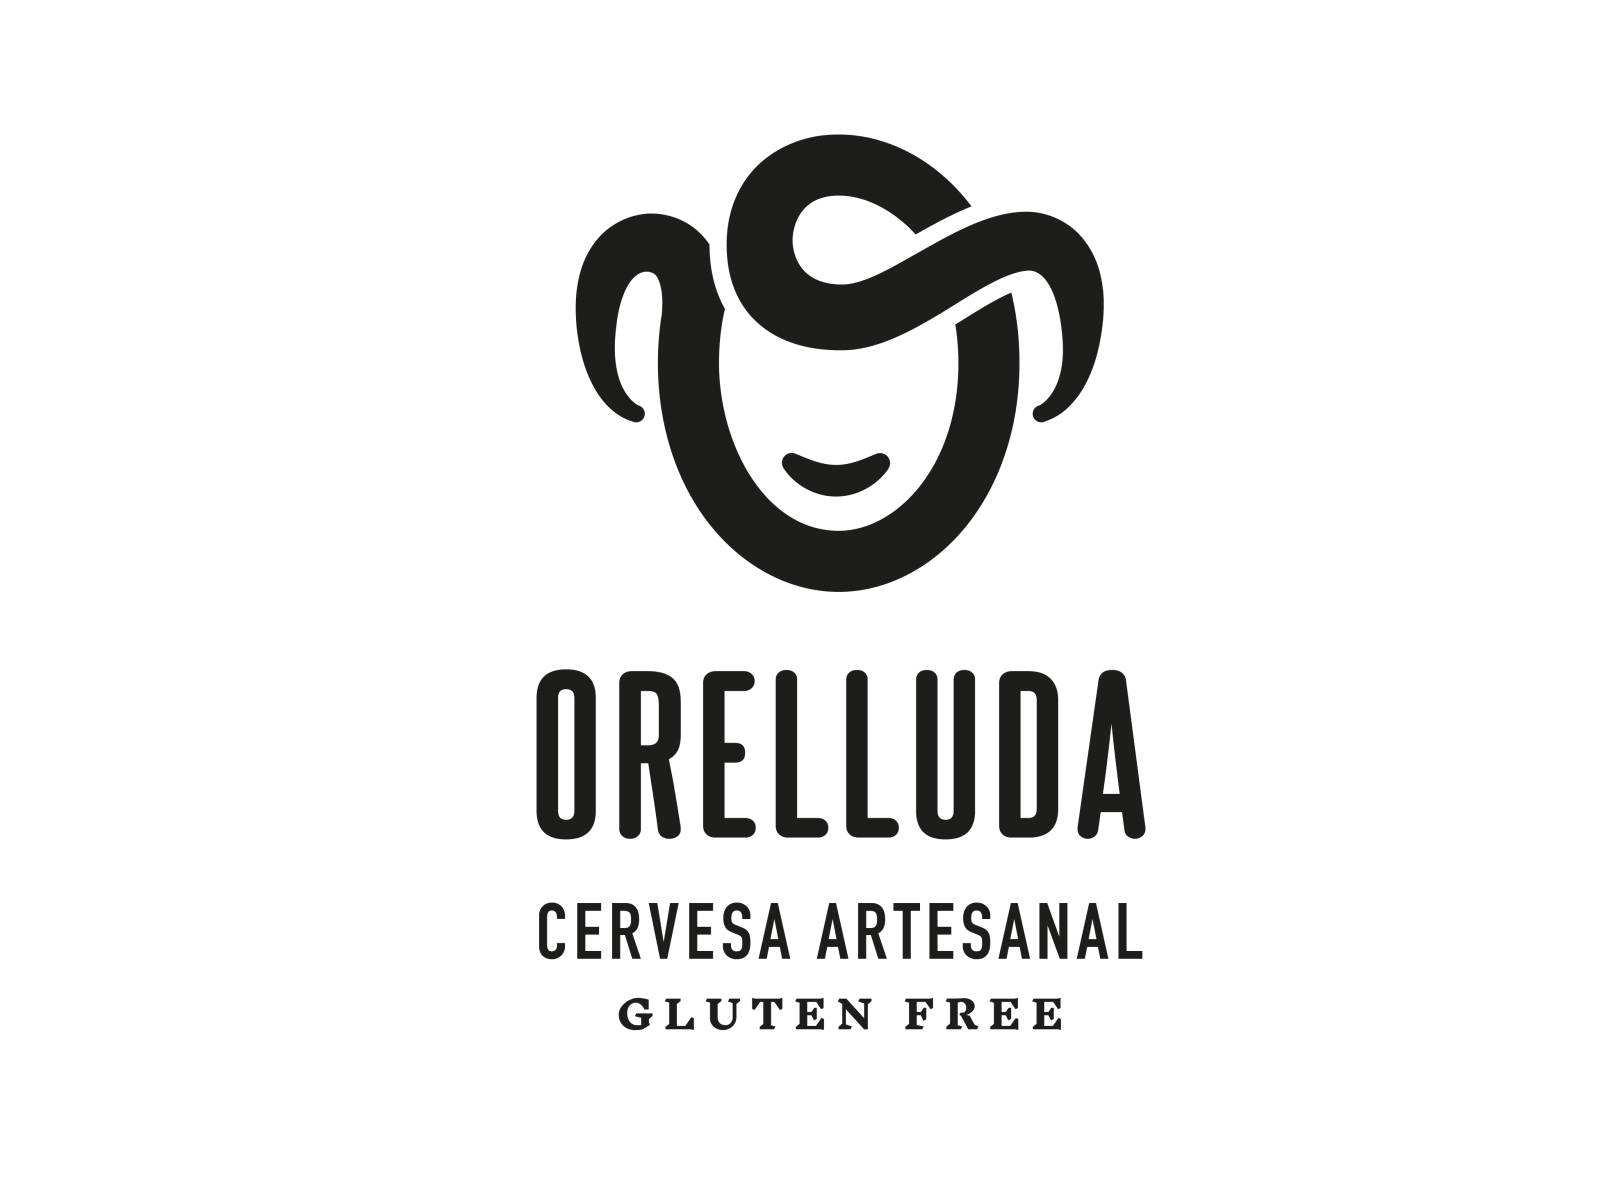 Orelluda - Craft beer by Paula López Almela on Dribbble